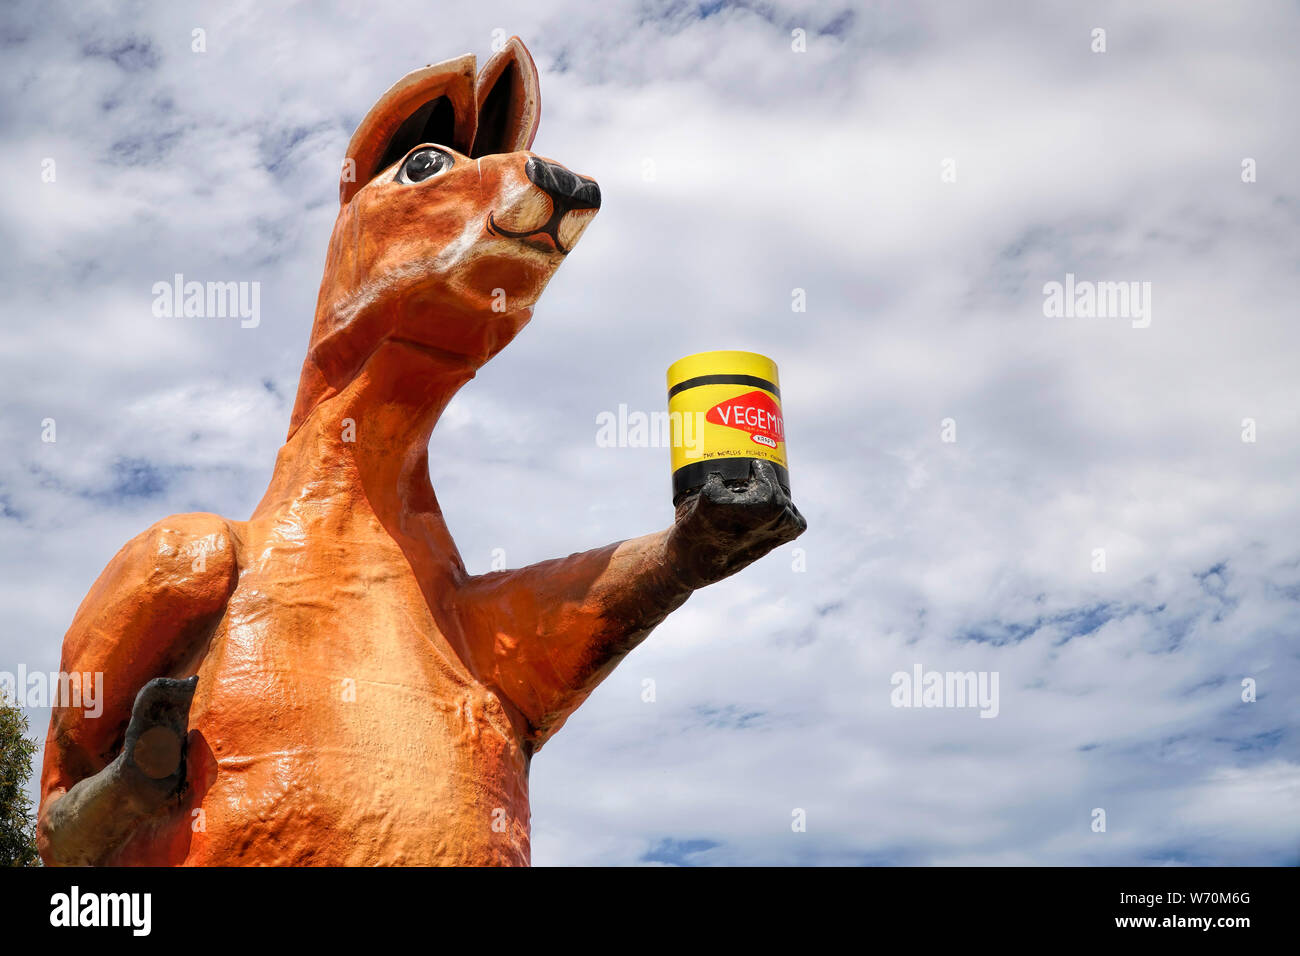 Australian kangaroo statue which is holding a vegemite jar at Border Village Roadhouse, Eyre Highway,South Australia Stock Photo